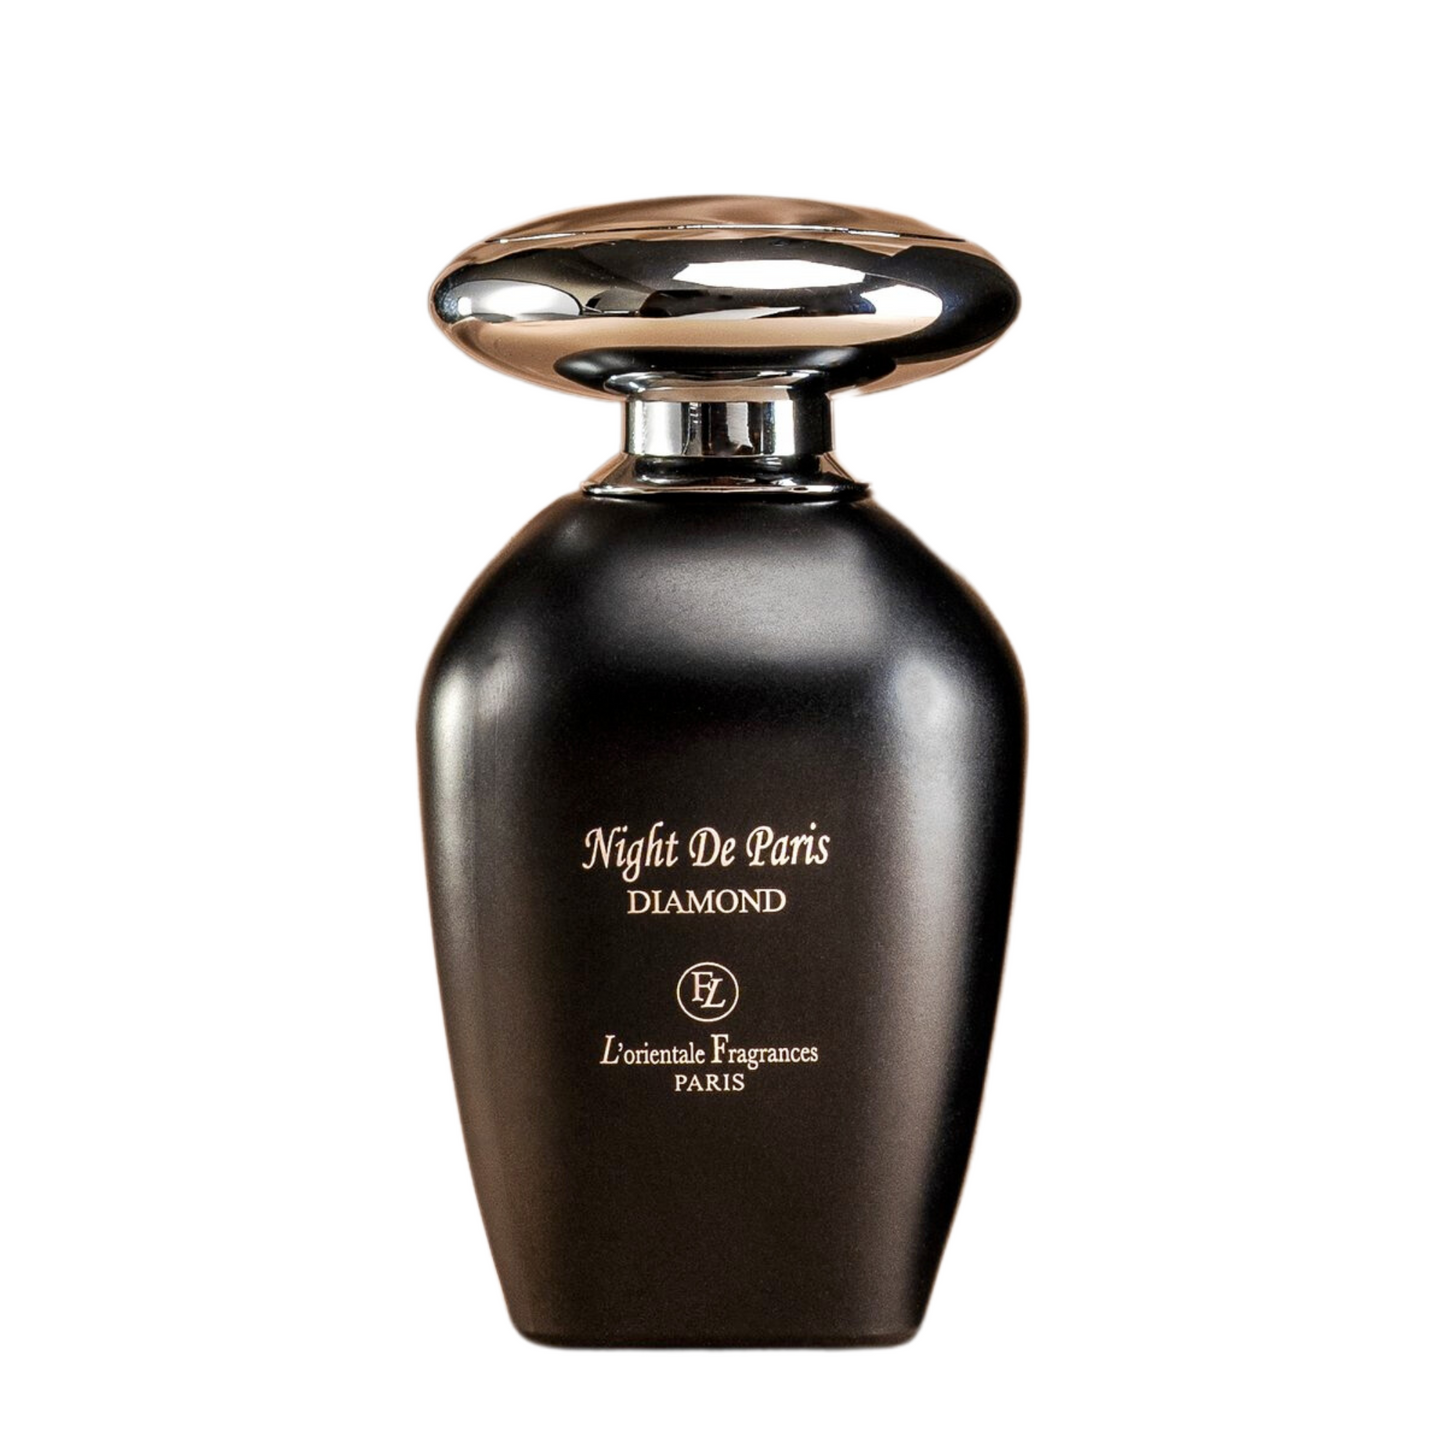 Perfume Unisex L'orientale Fragrances Night De Paris DIAMOND 100ml EDP